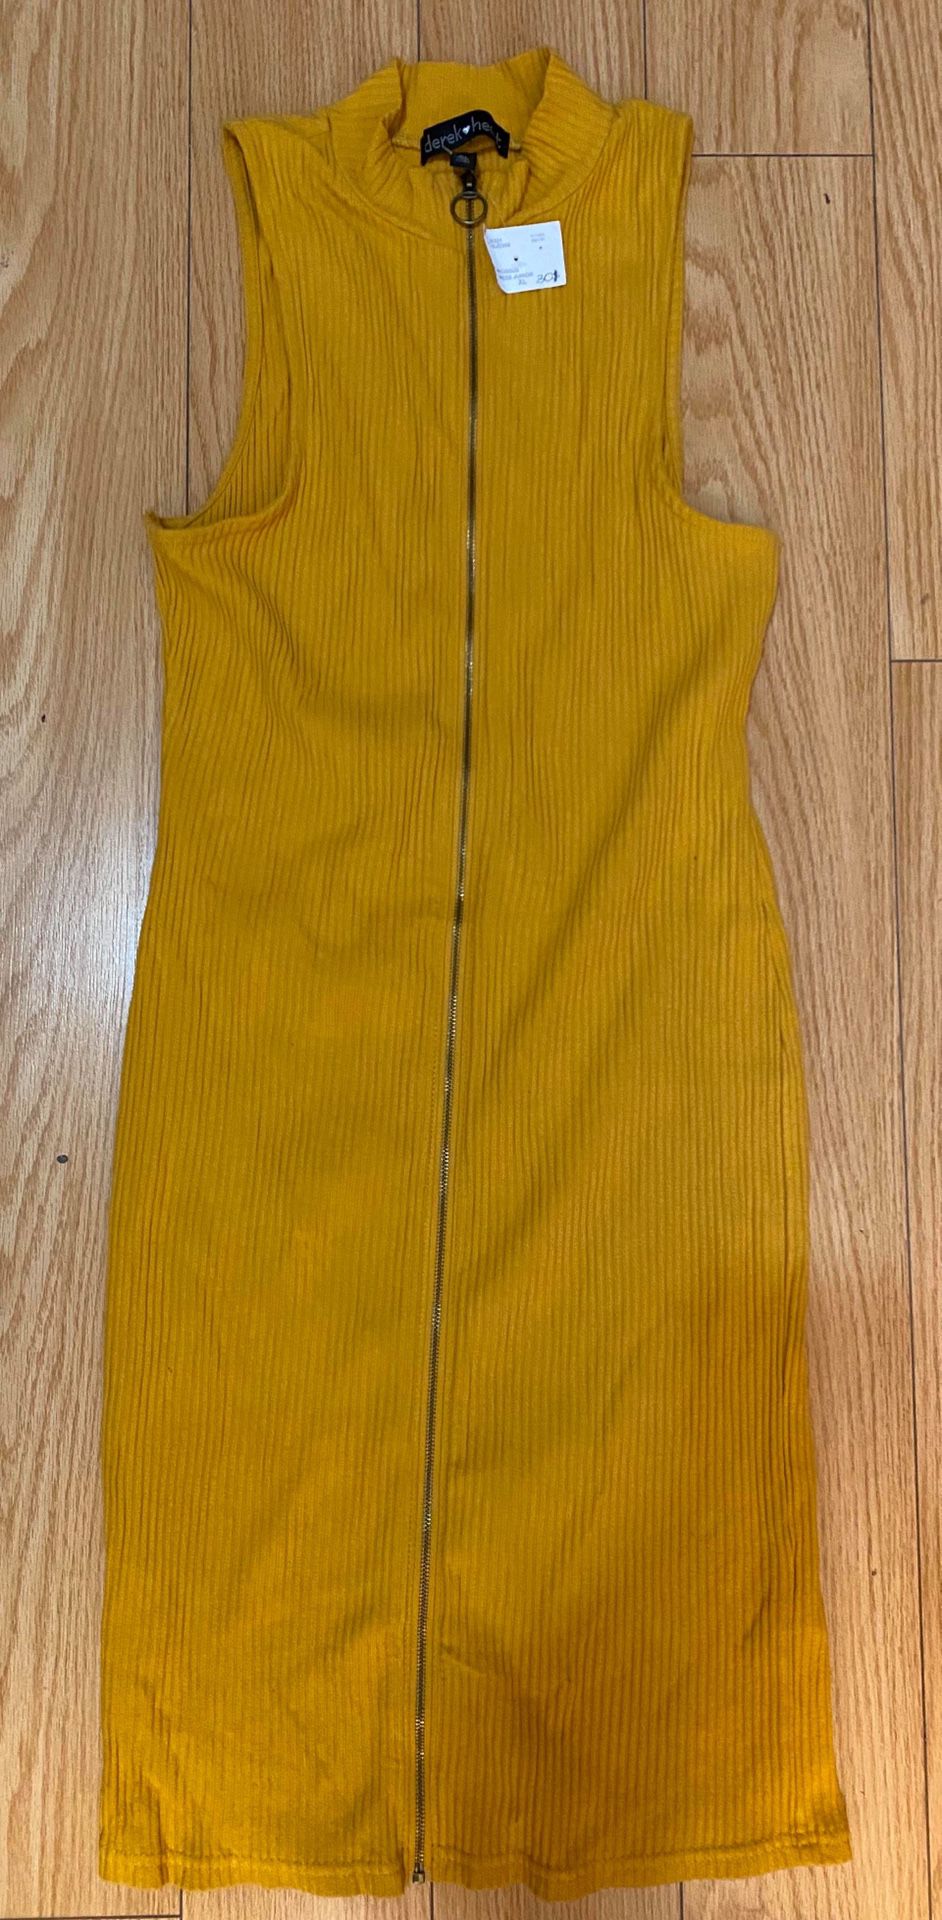 Yellow dress size L new